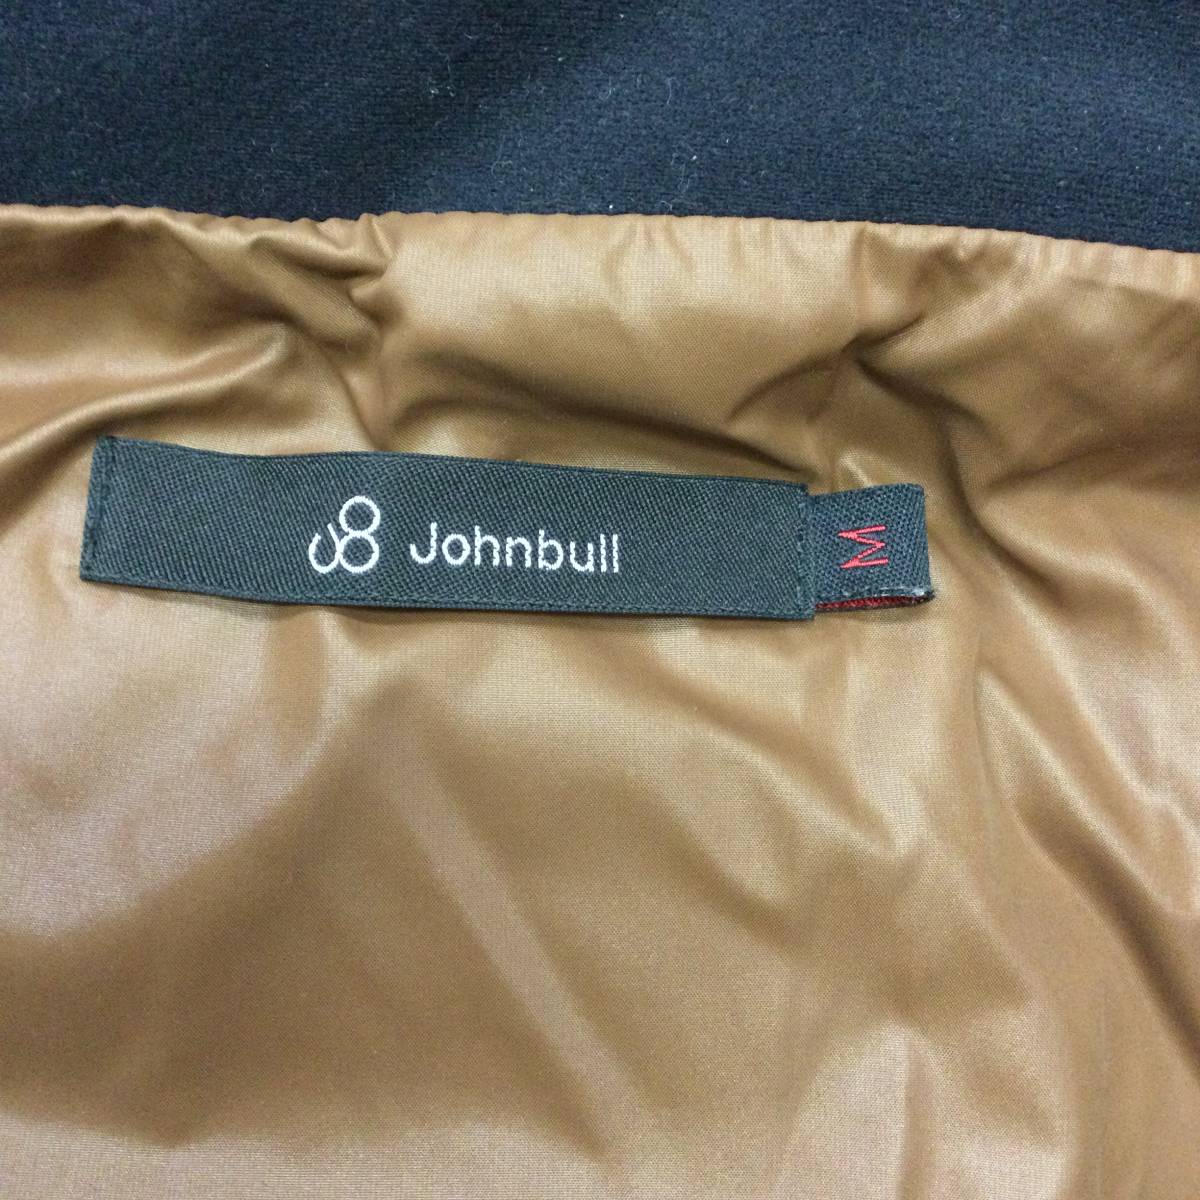 M25*johnbull | Johnbull пуховик прекрасный товар красный размер M